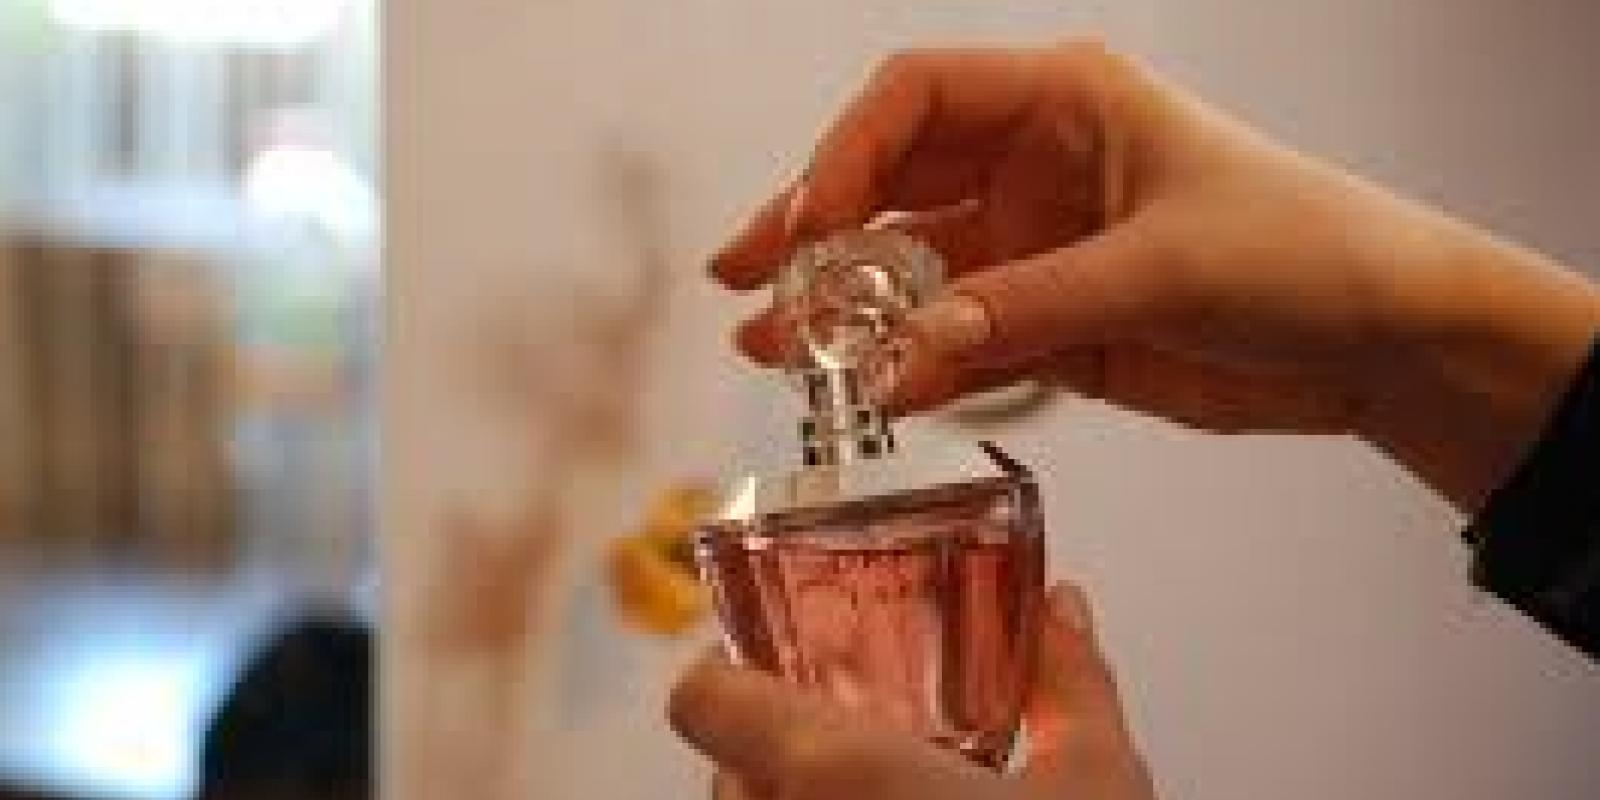 Perfume or Deodorant